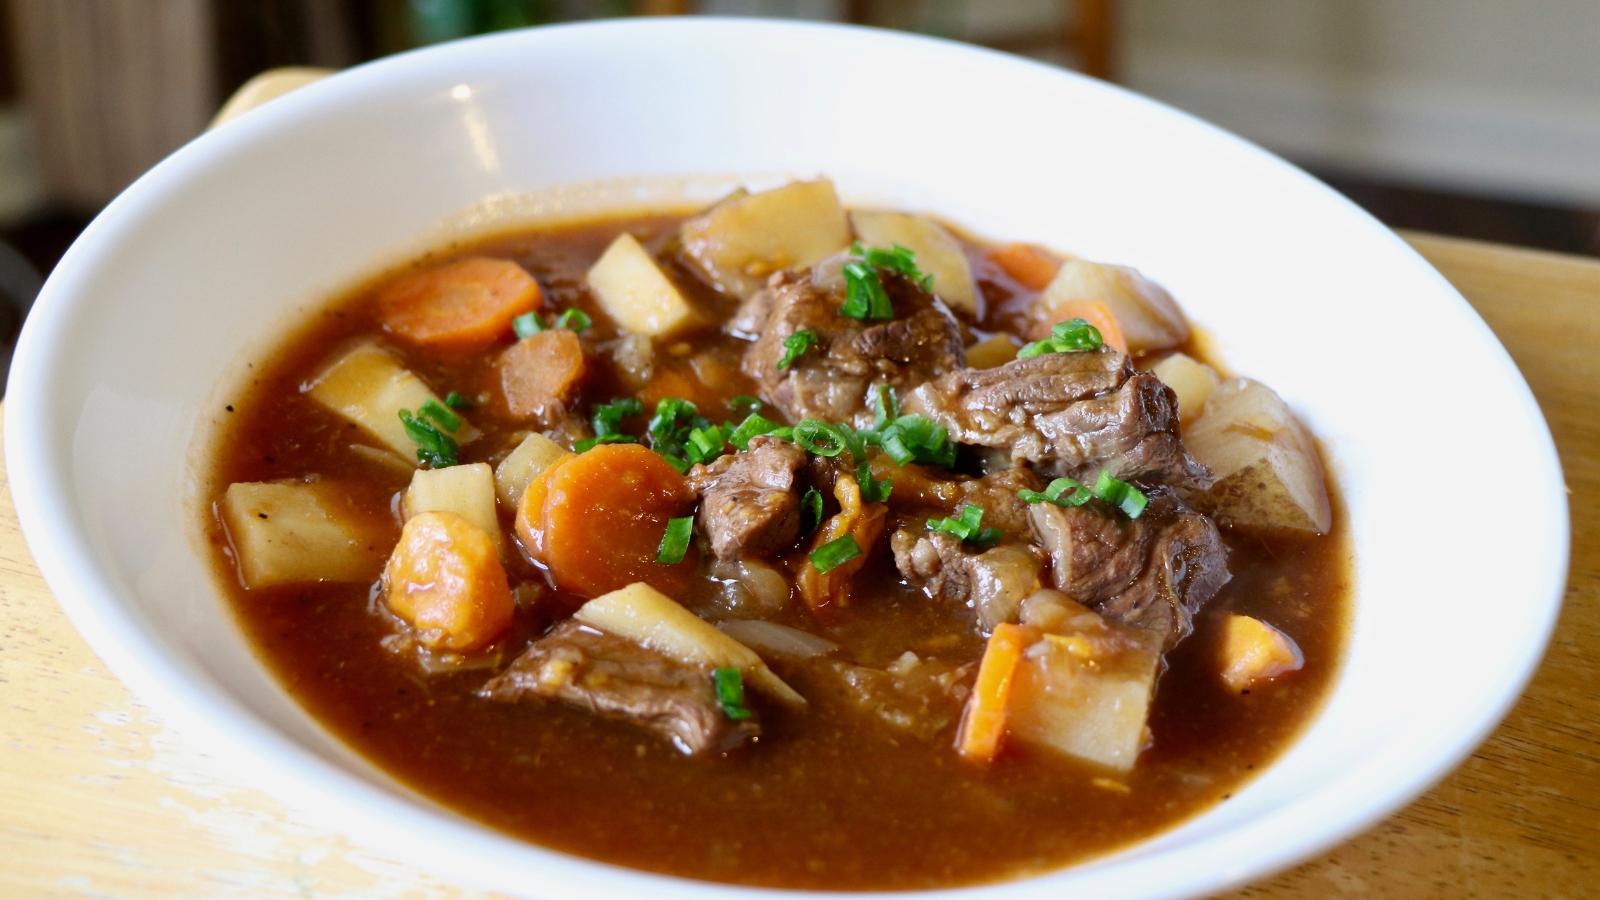 Irish beef stew served on a plate